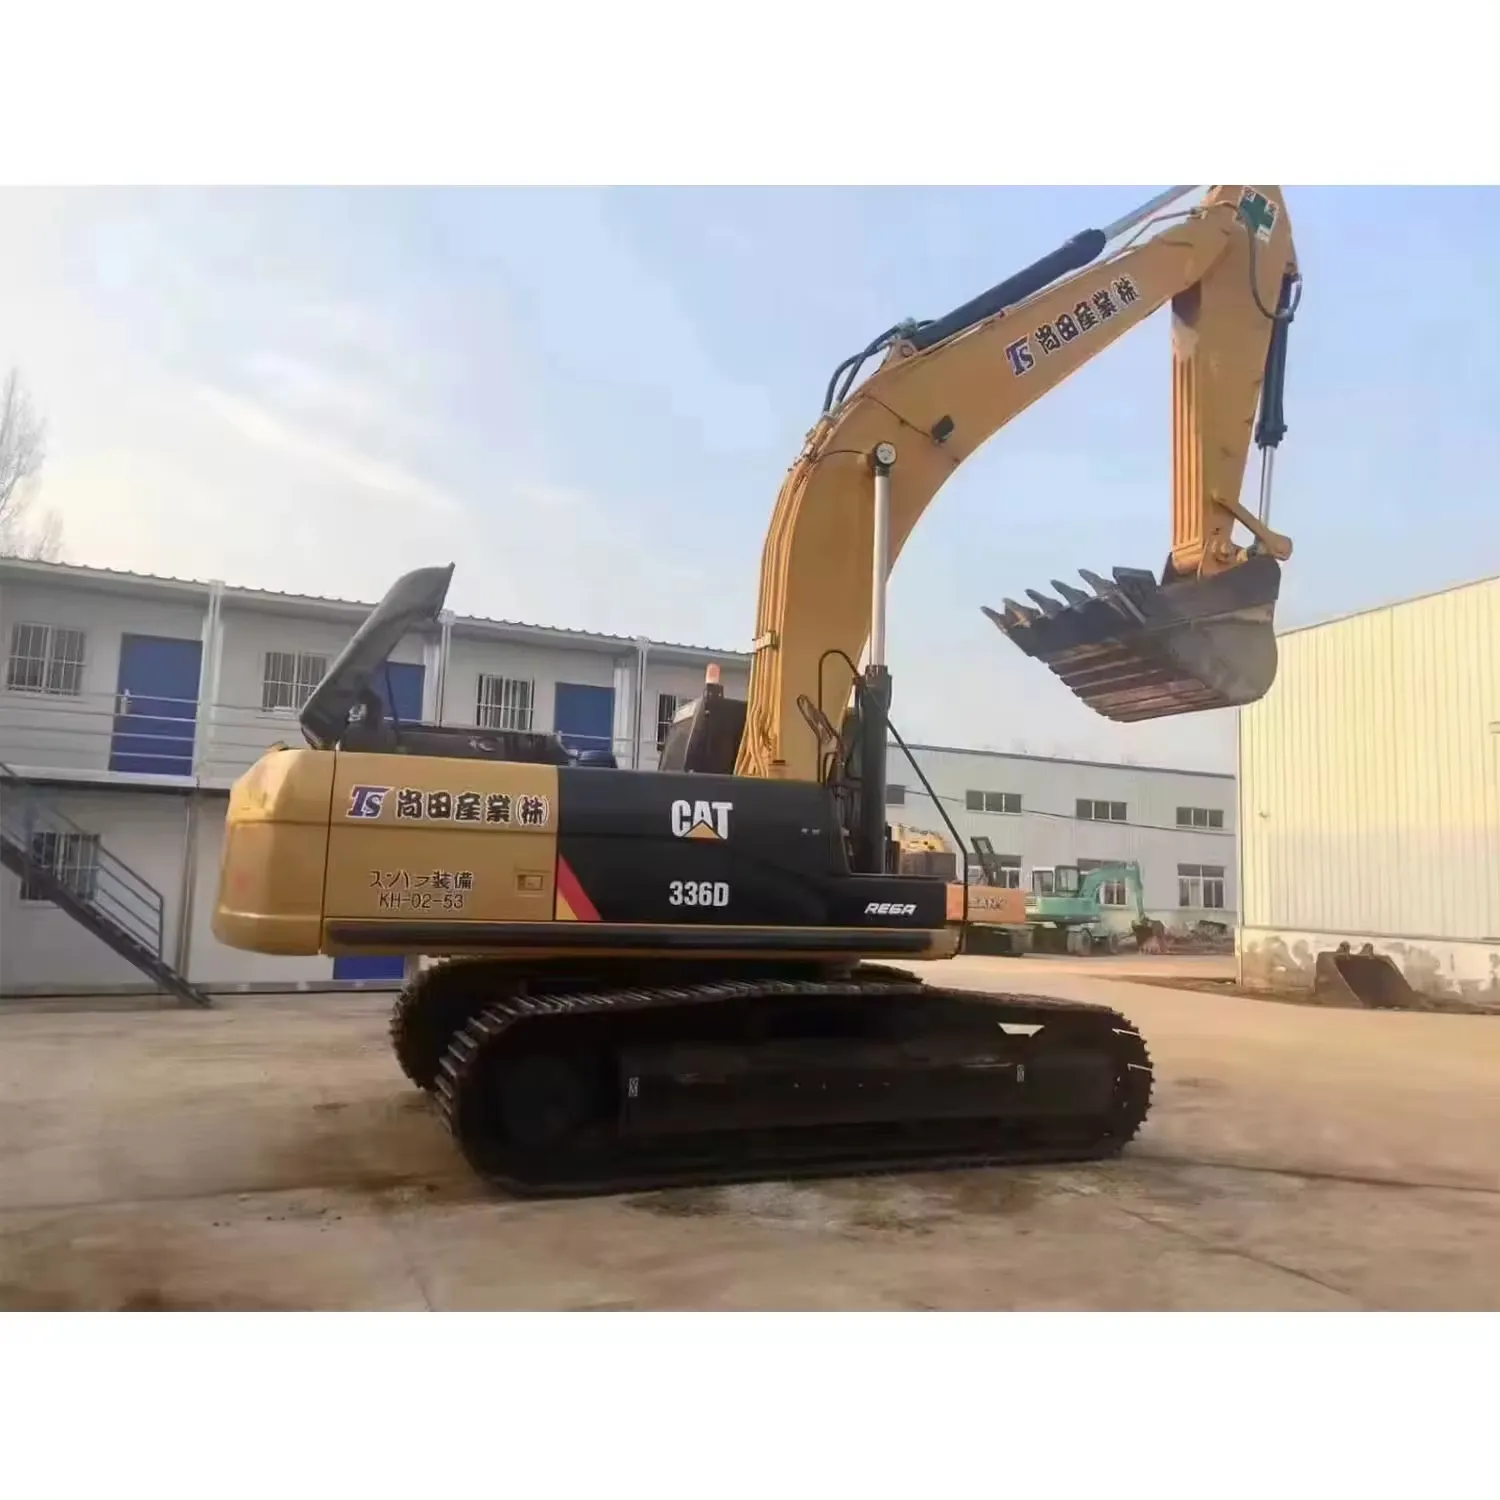 used excavators 95% new used machinery cat excavator 336d japan caterpillar crawler excavator 36ton for sale